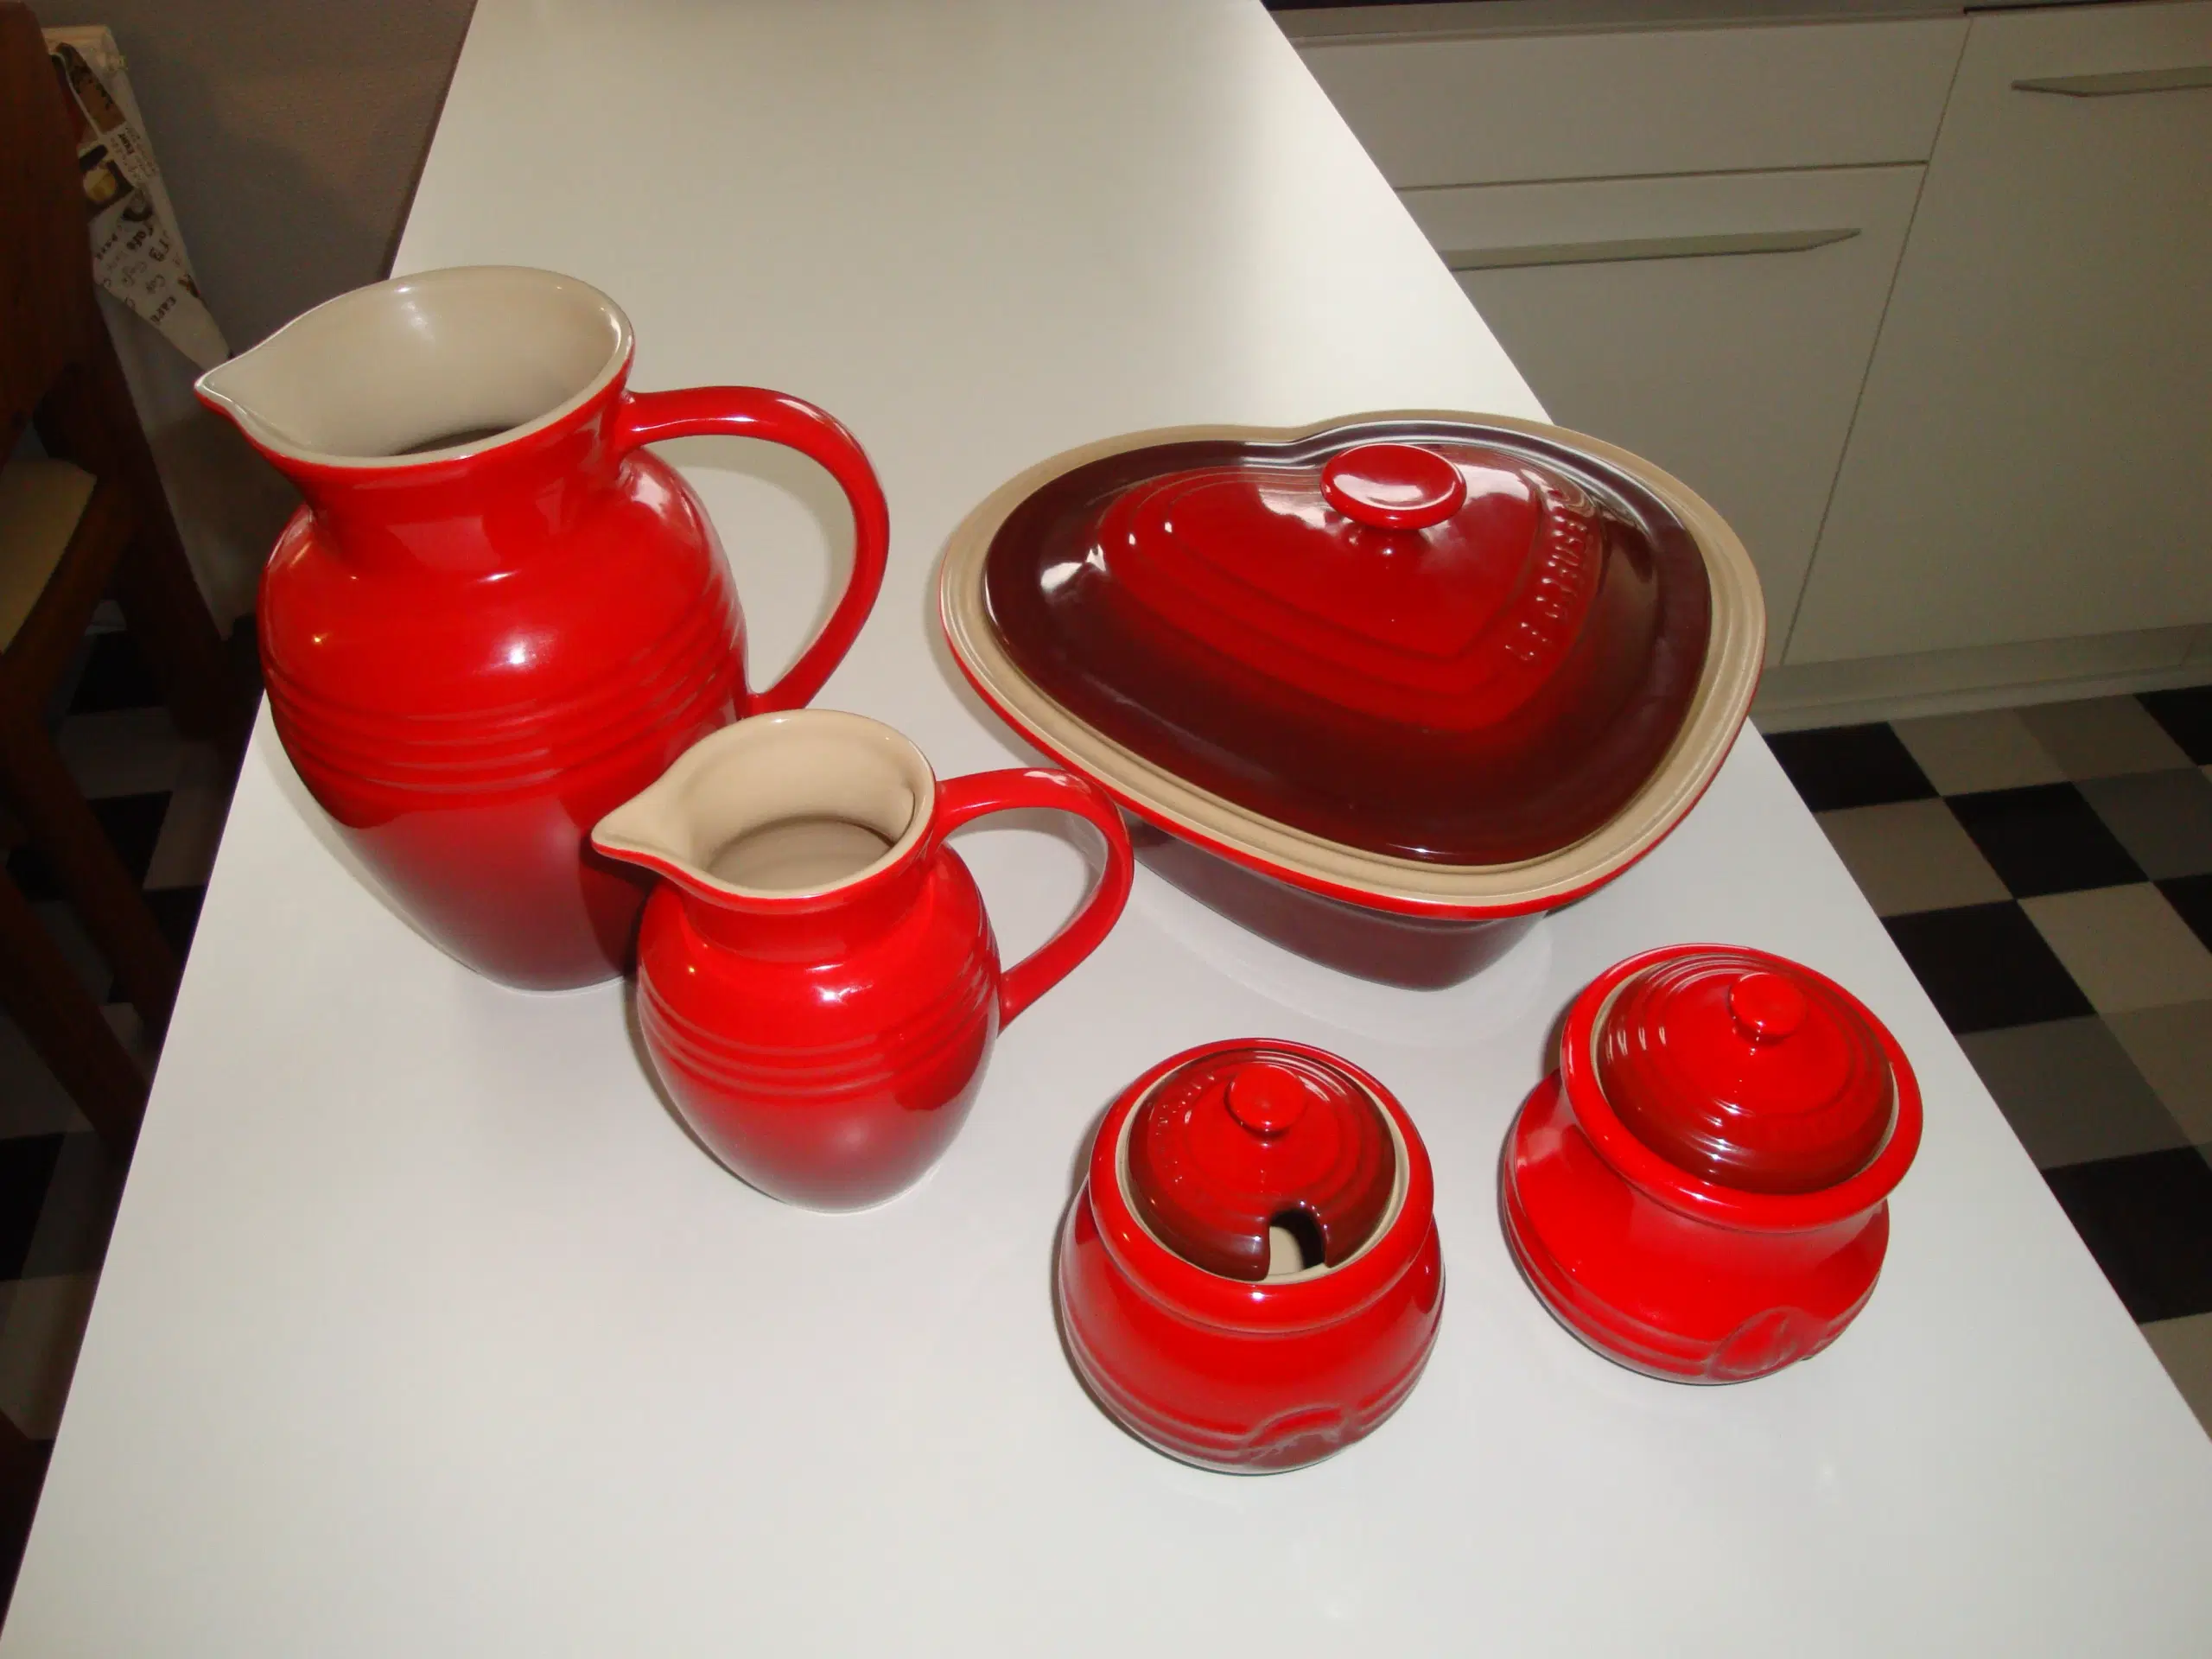 Le Creuset keramik. | Hadsund GulogGratis.dk